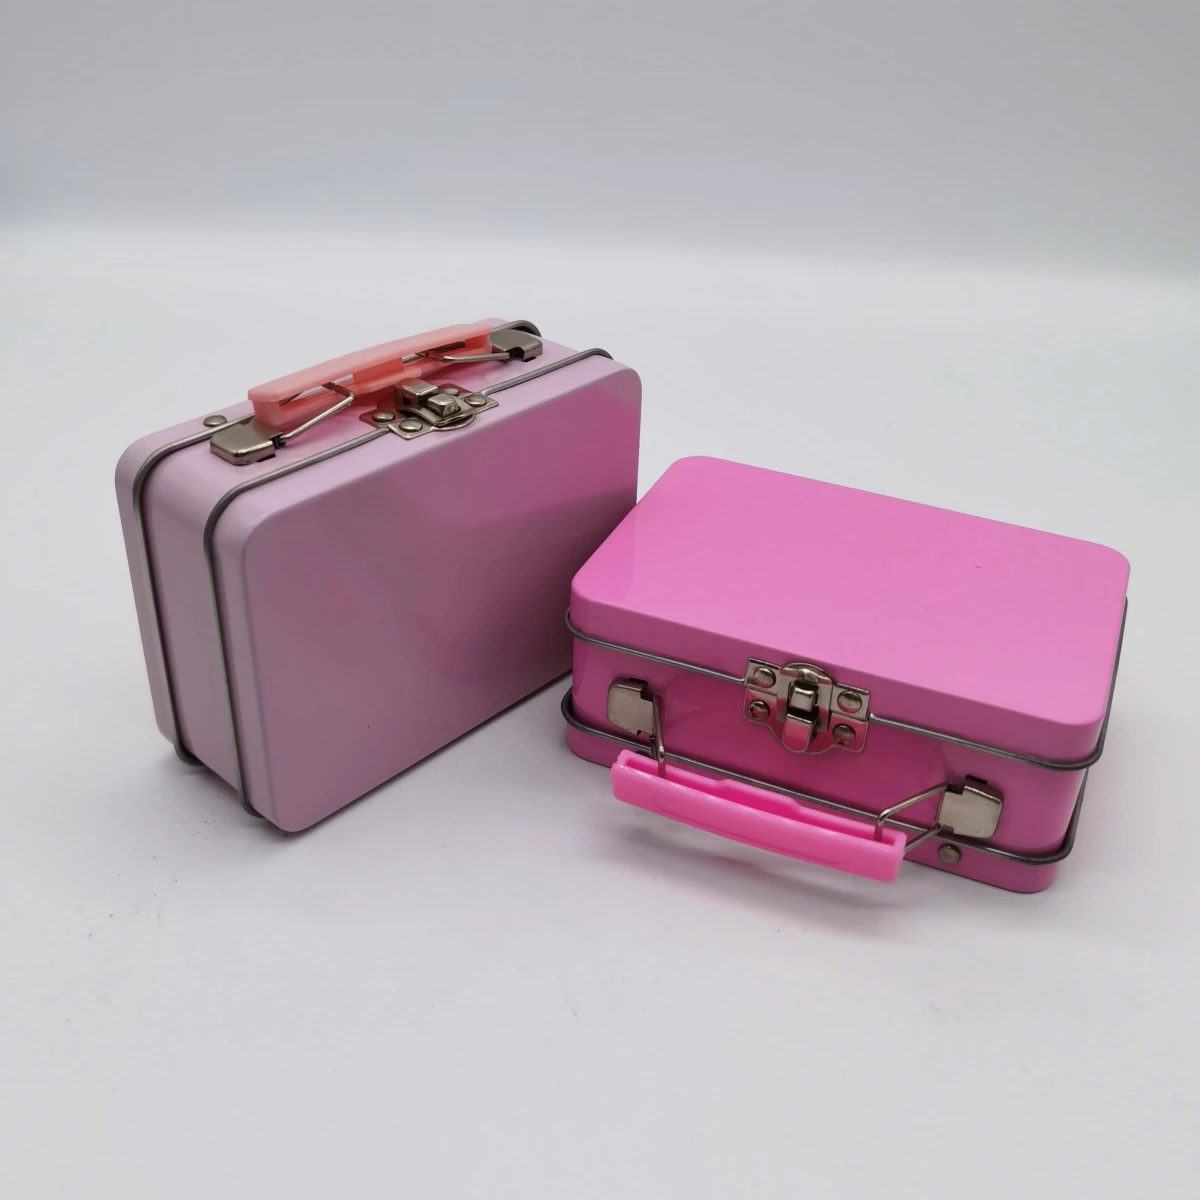 China Lip Gloss packing iron box Manufacturers, Factory - Buy Lip Gloss packing iron box at Good Price - Haohang